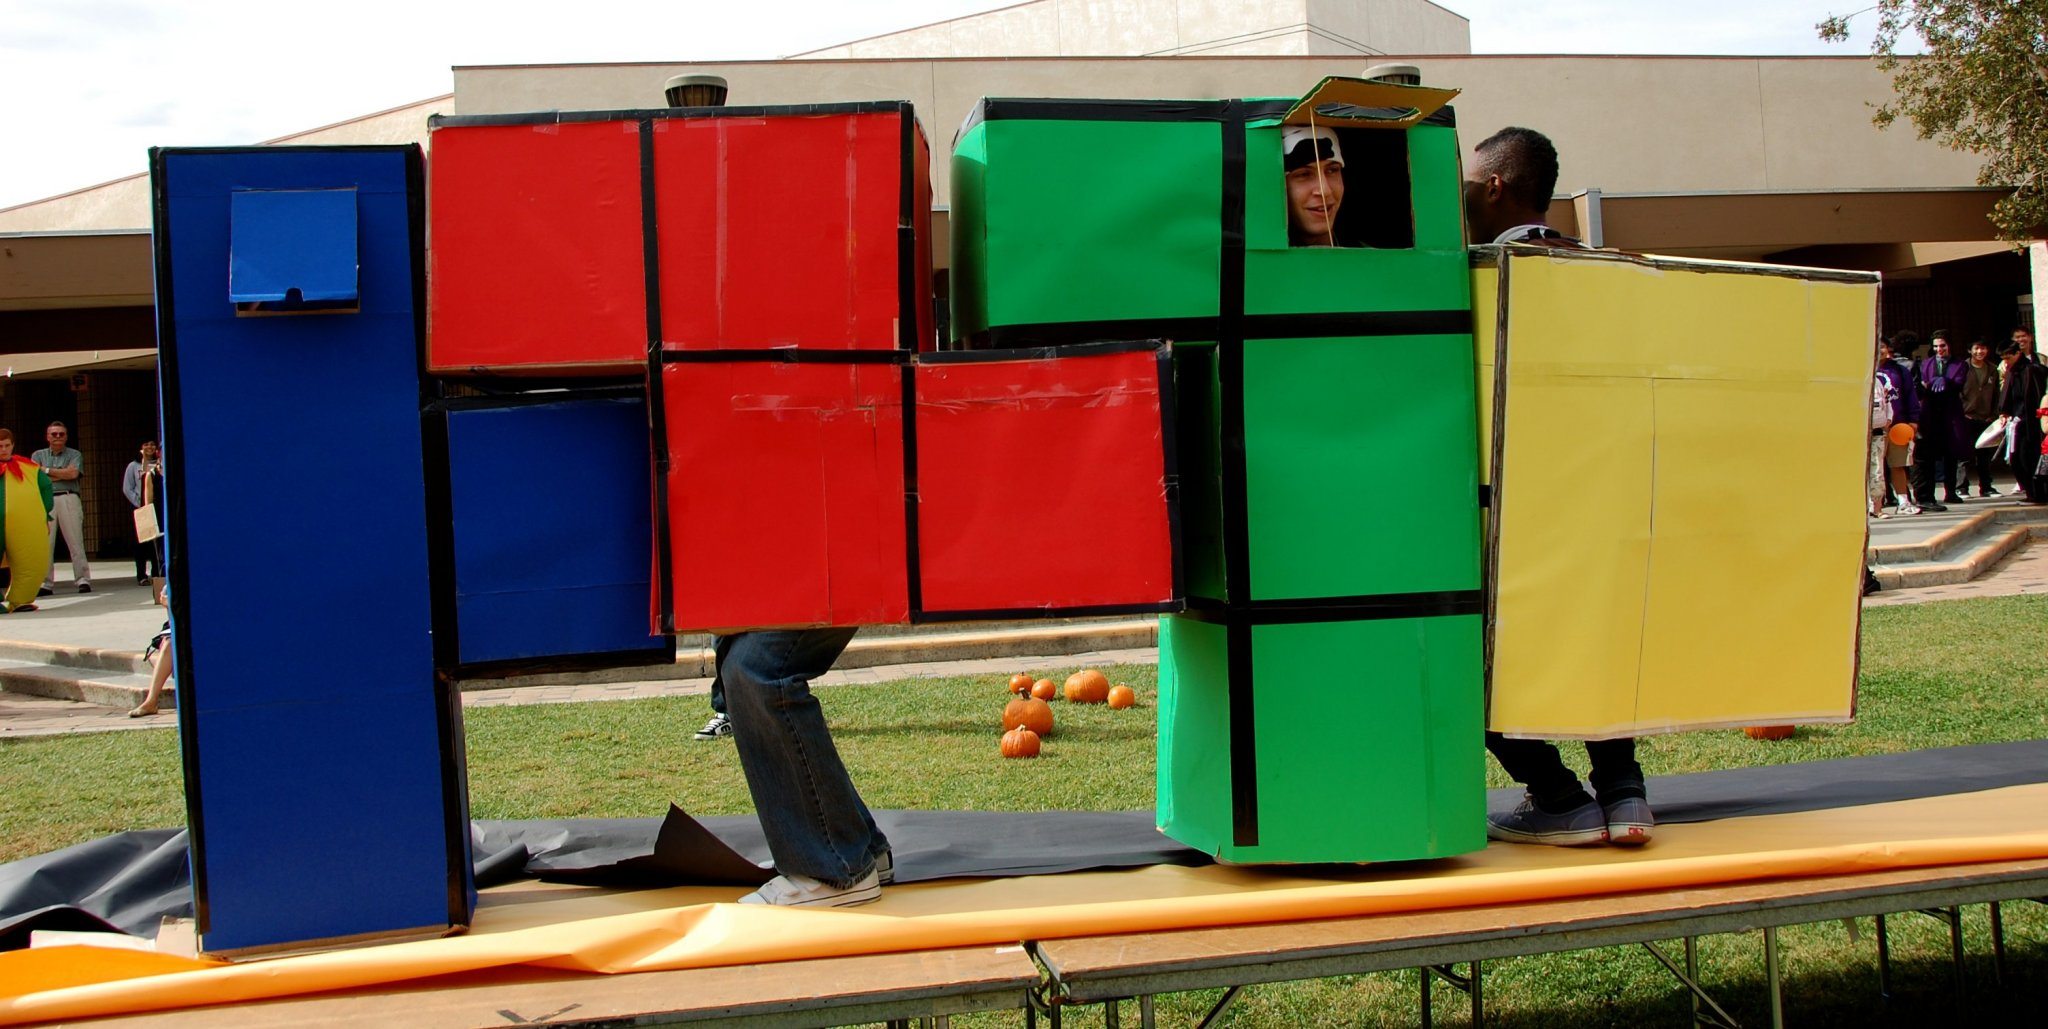 Tetris pieces Nerdy Halloween Costume